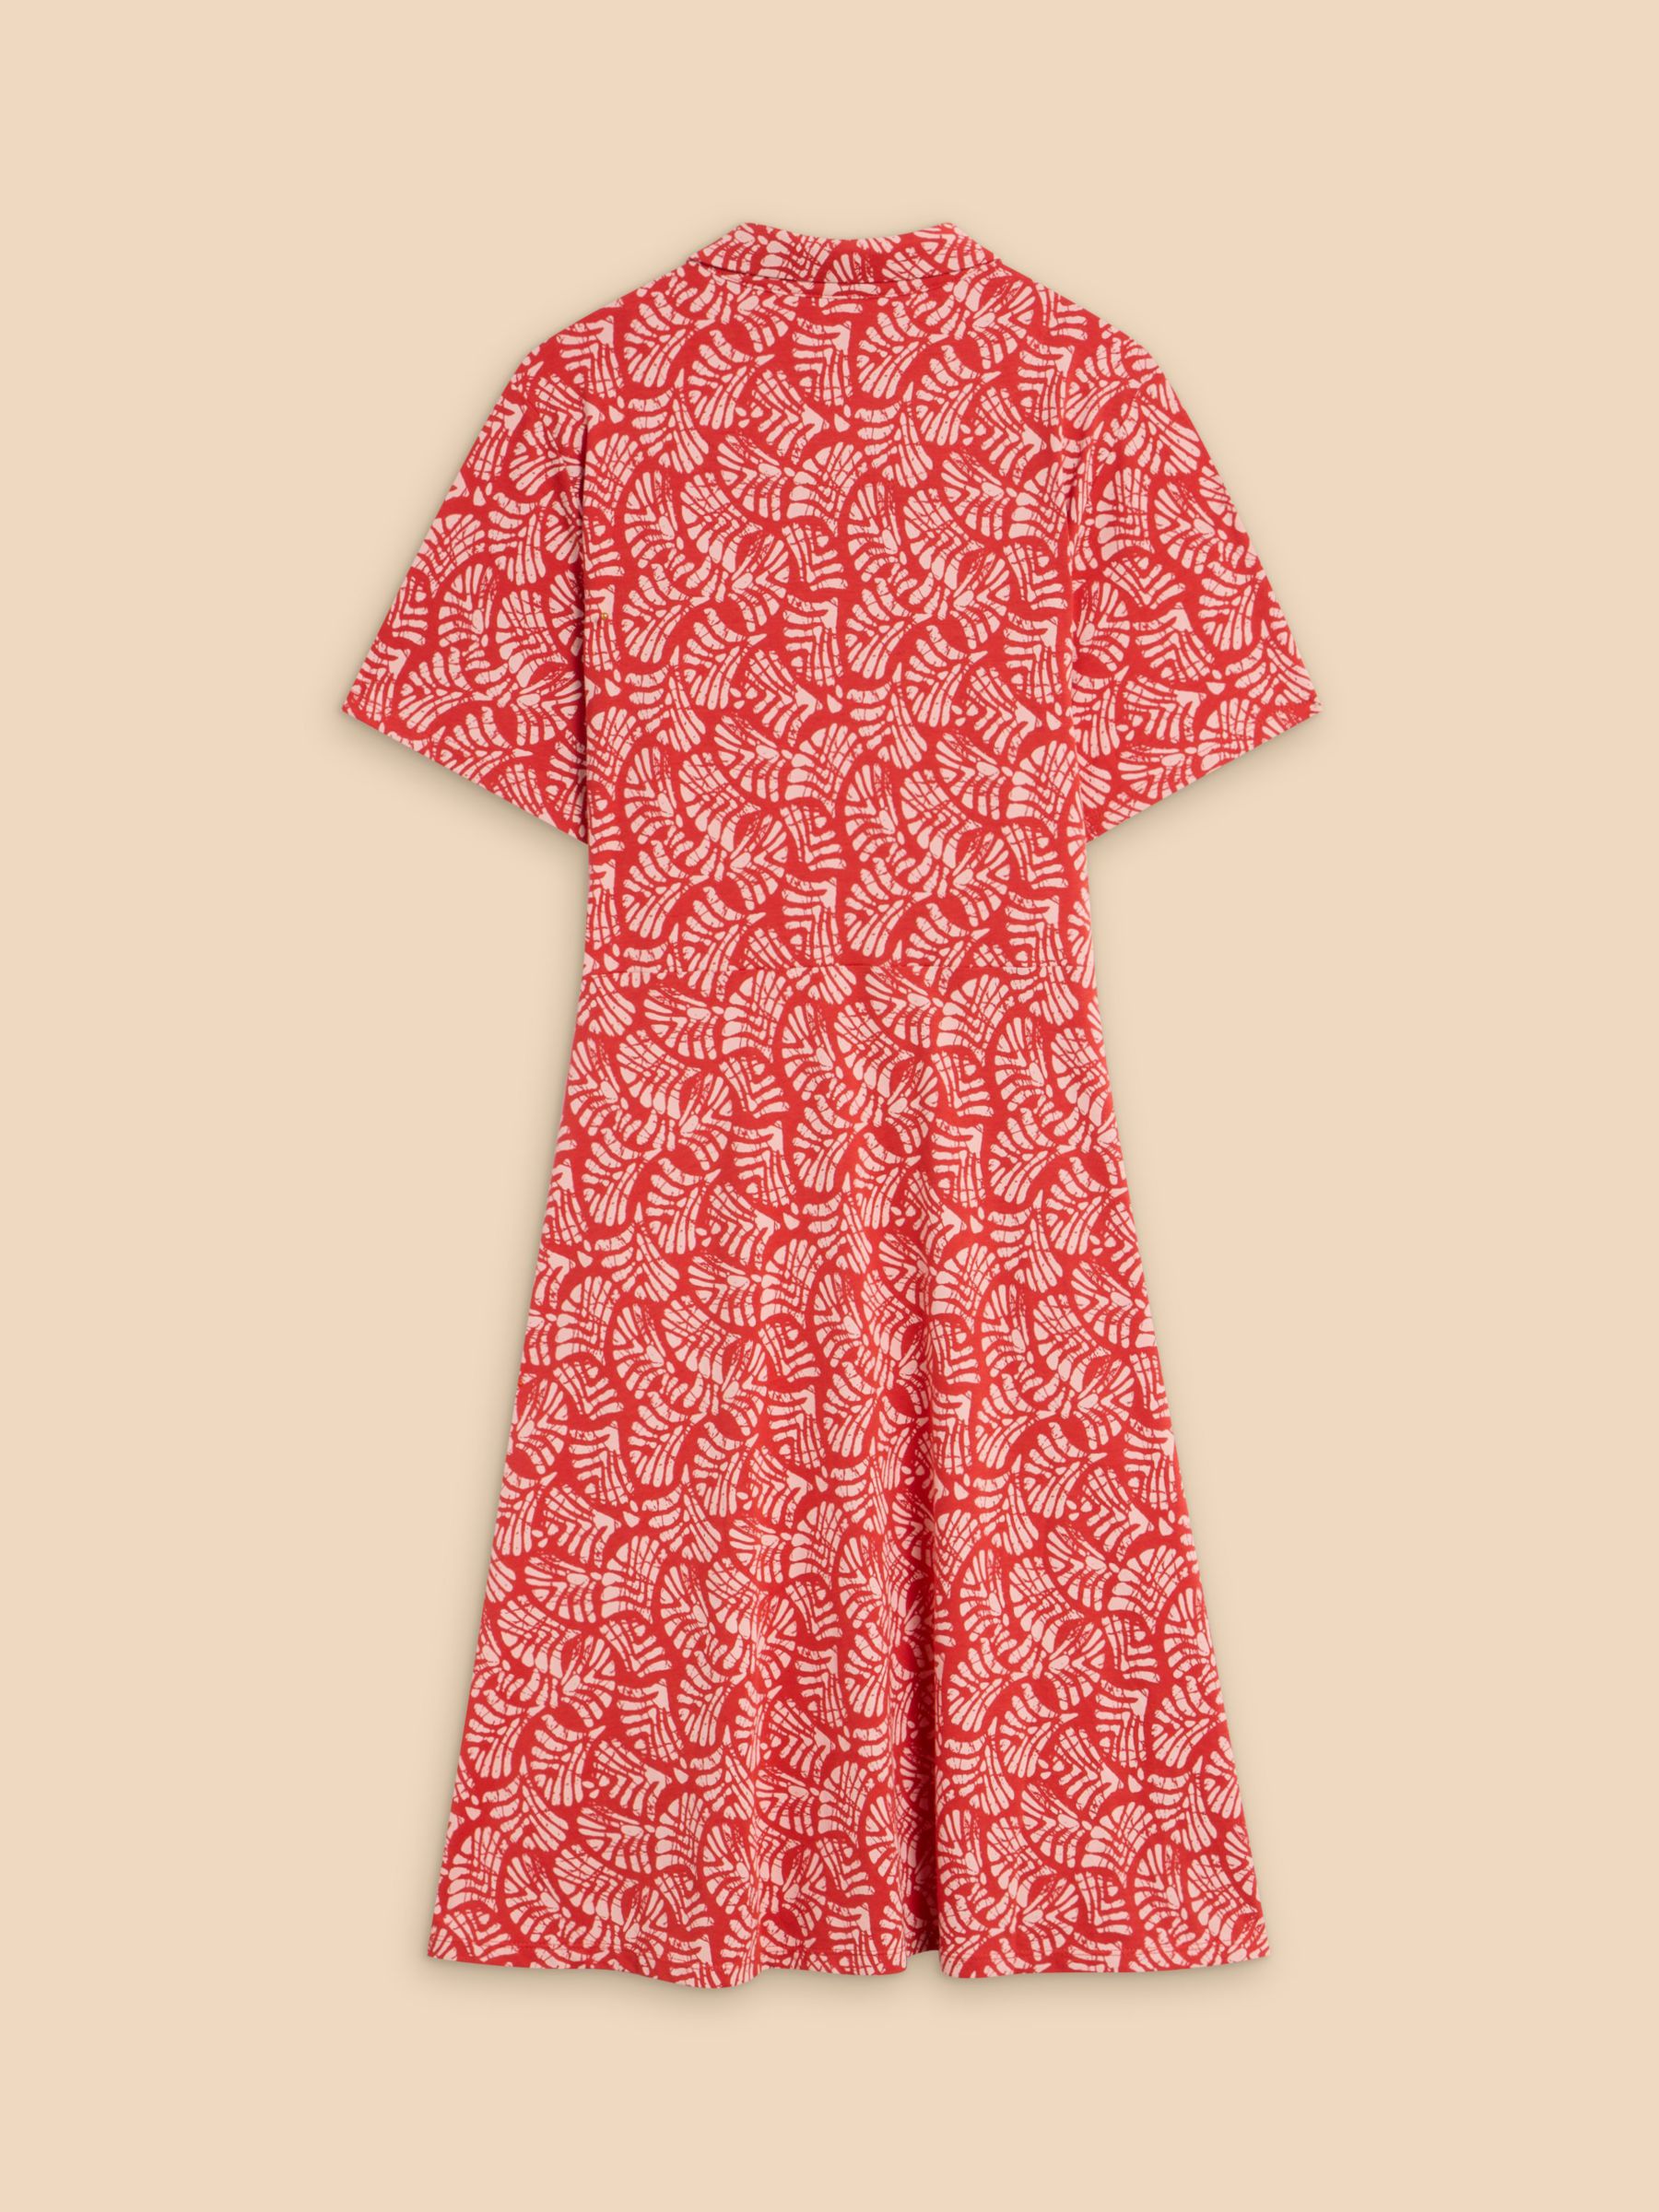 White Stuff Ria Abstract Print Jersey Shirt Dress, Red/White, 6